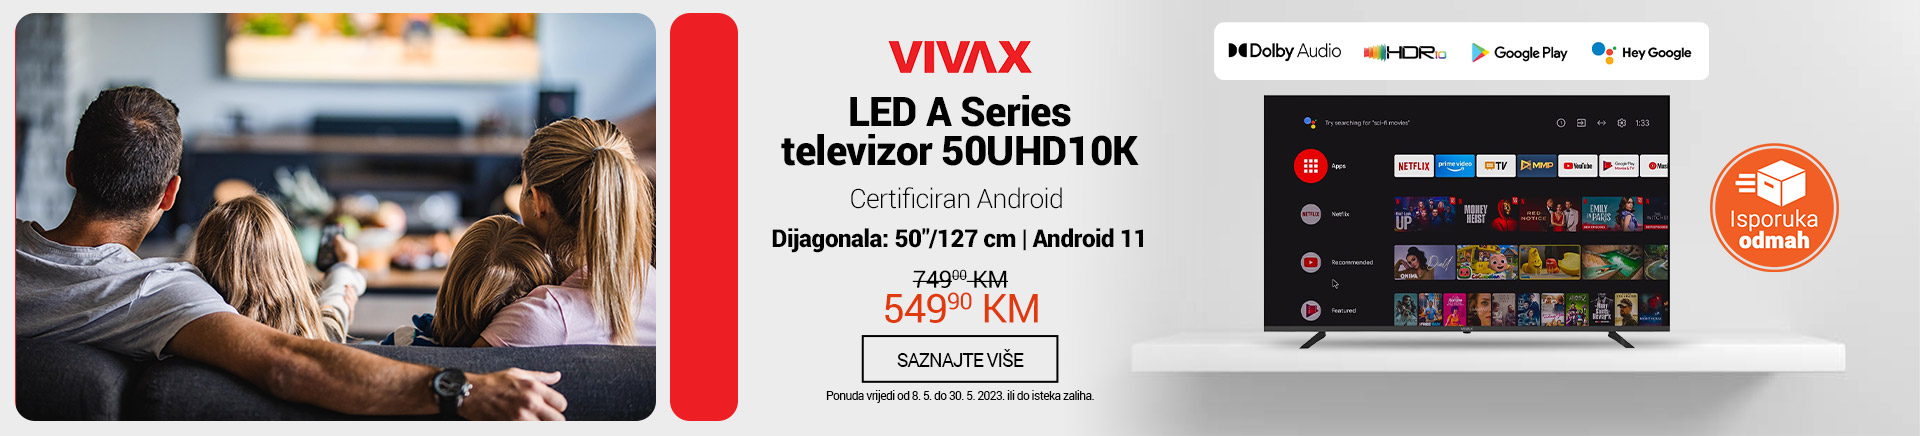 BA VIVAX LED A Series televizor 50UHD10K Android MOBILE 380 X 436.jpg